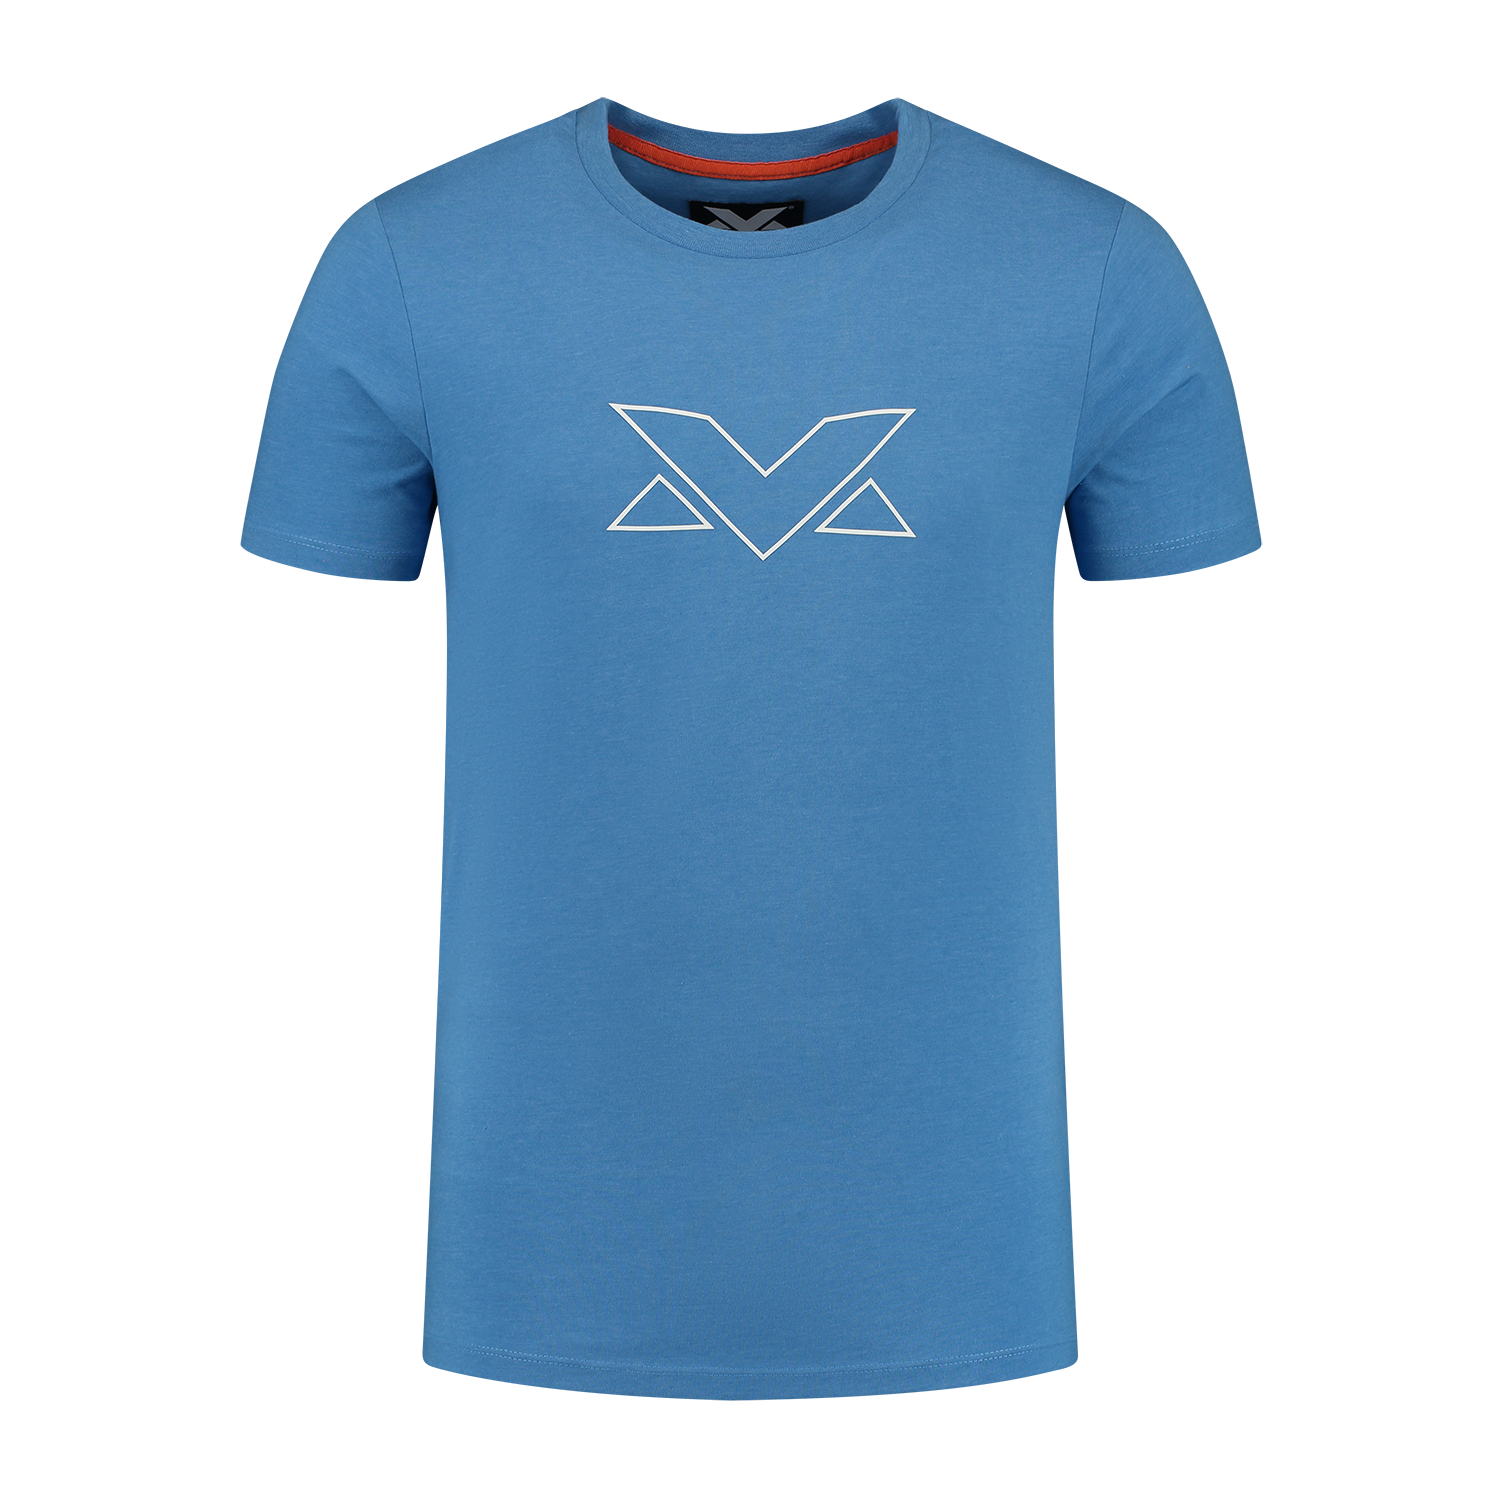 MV Logo T-shirt - Blauw - S - Max Verstappen